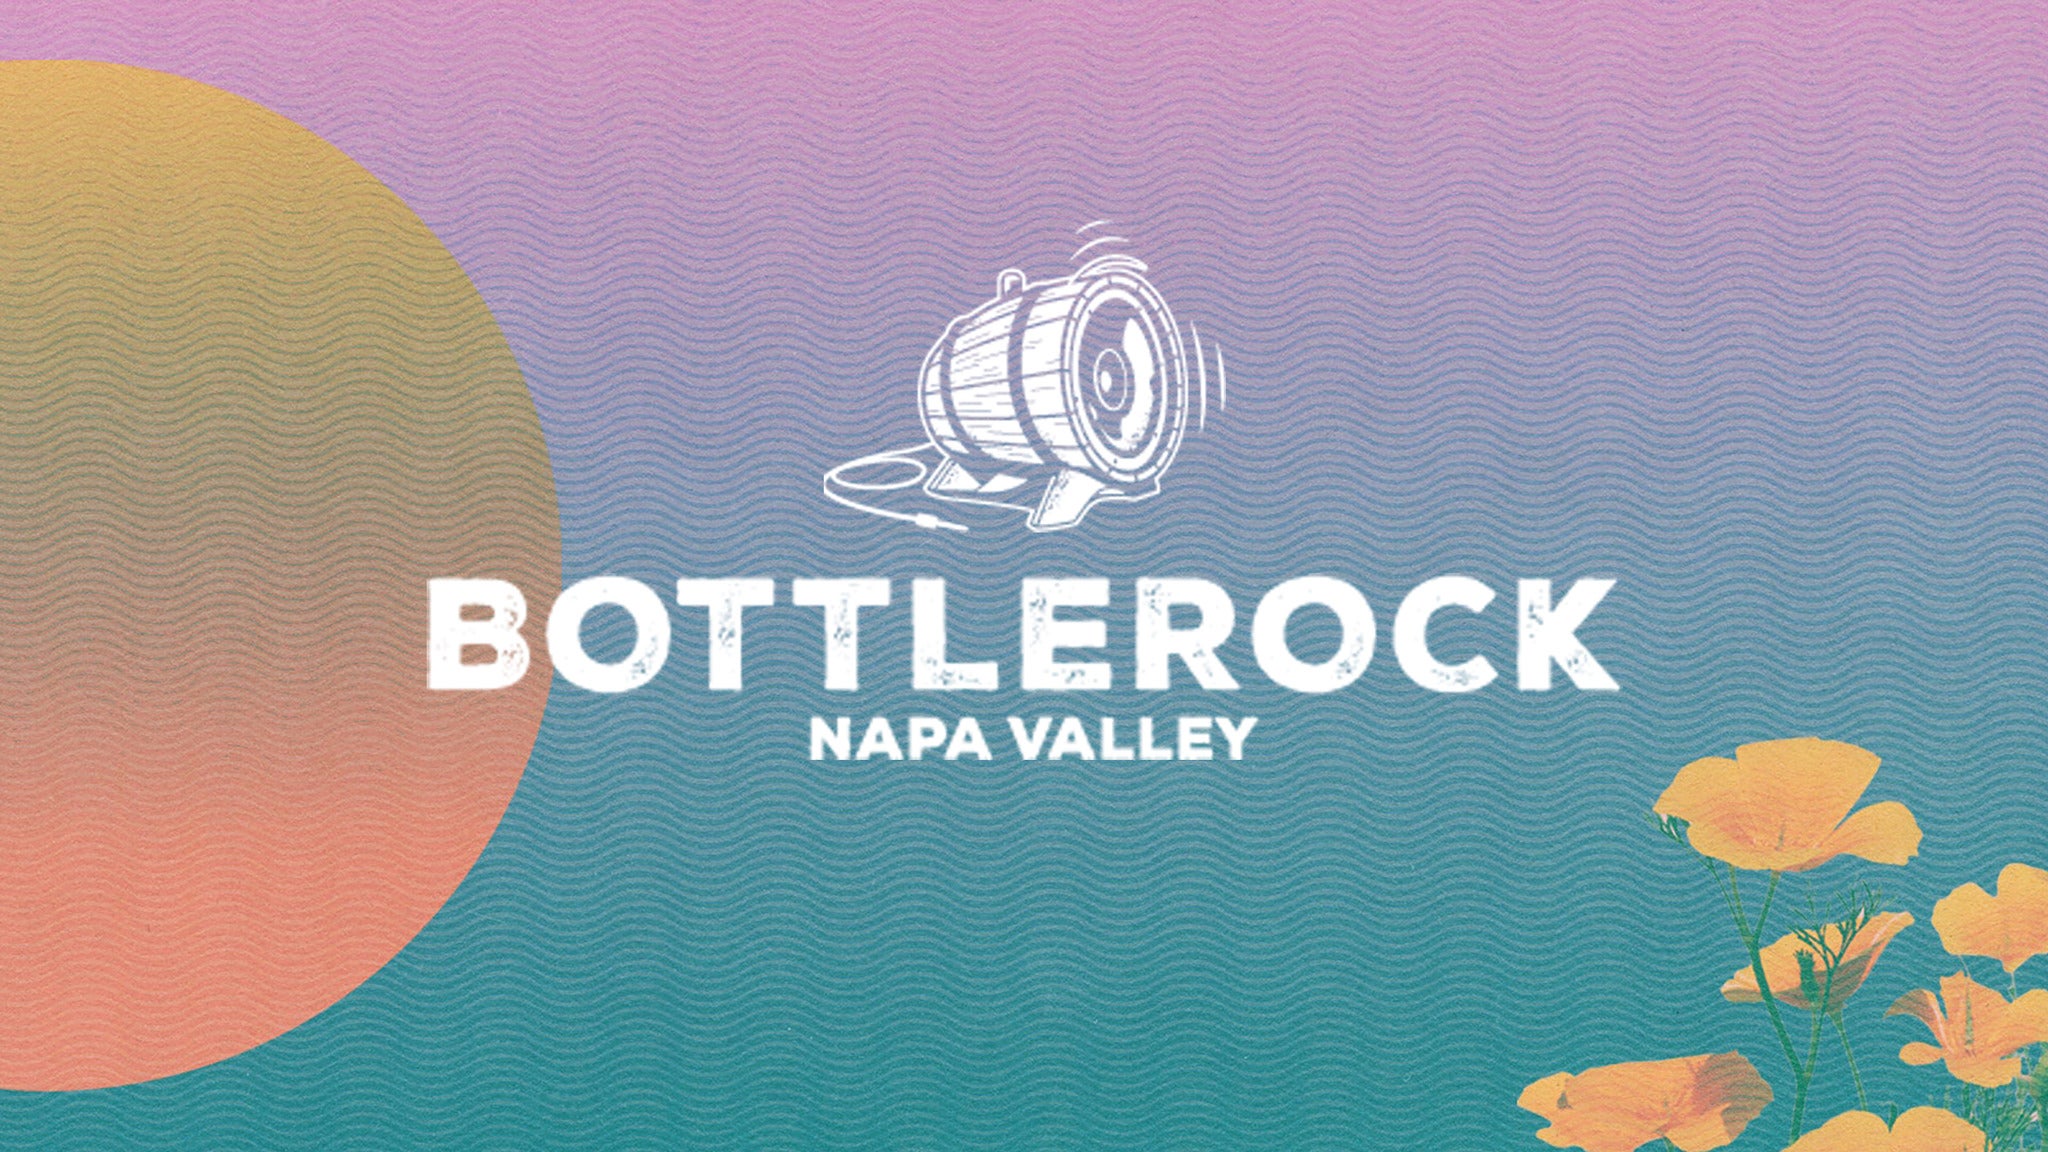 BottleRock Napa Valley at Napa Valley Expo